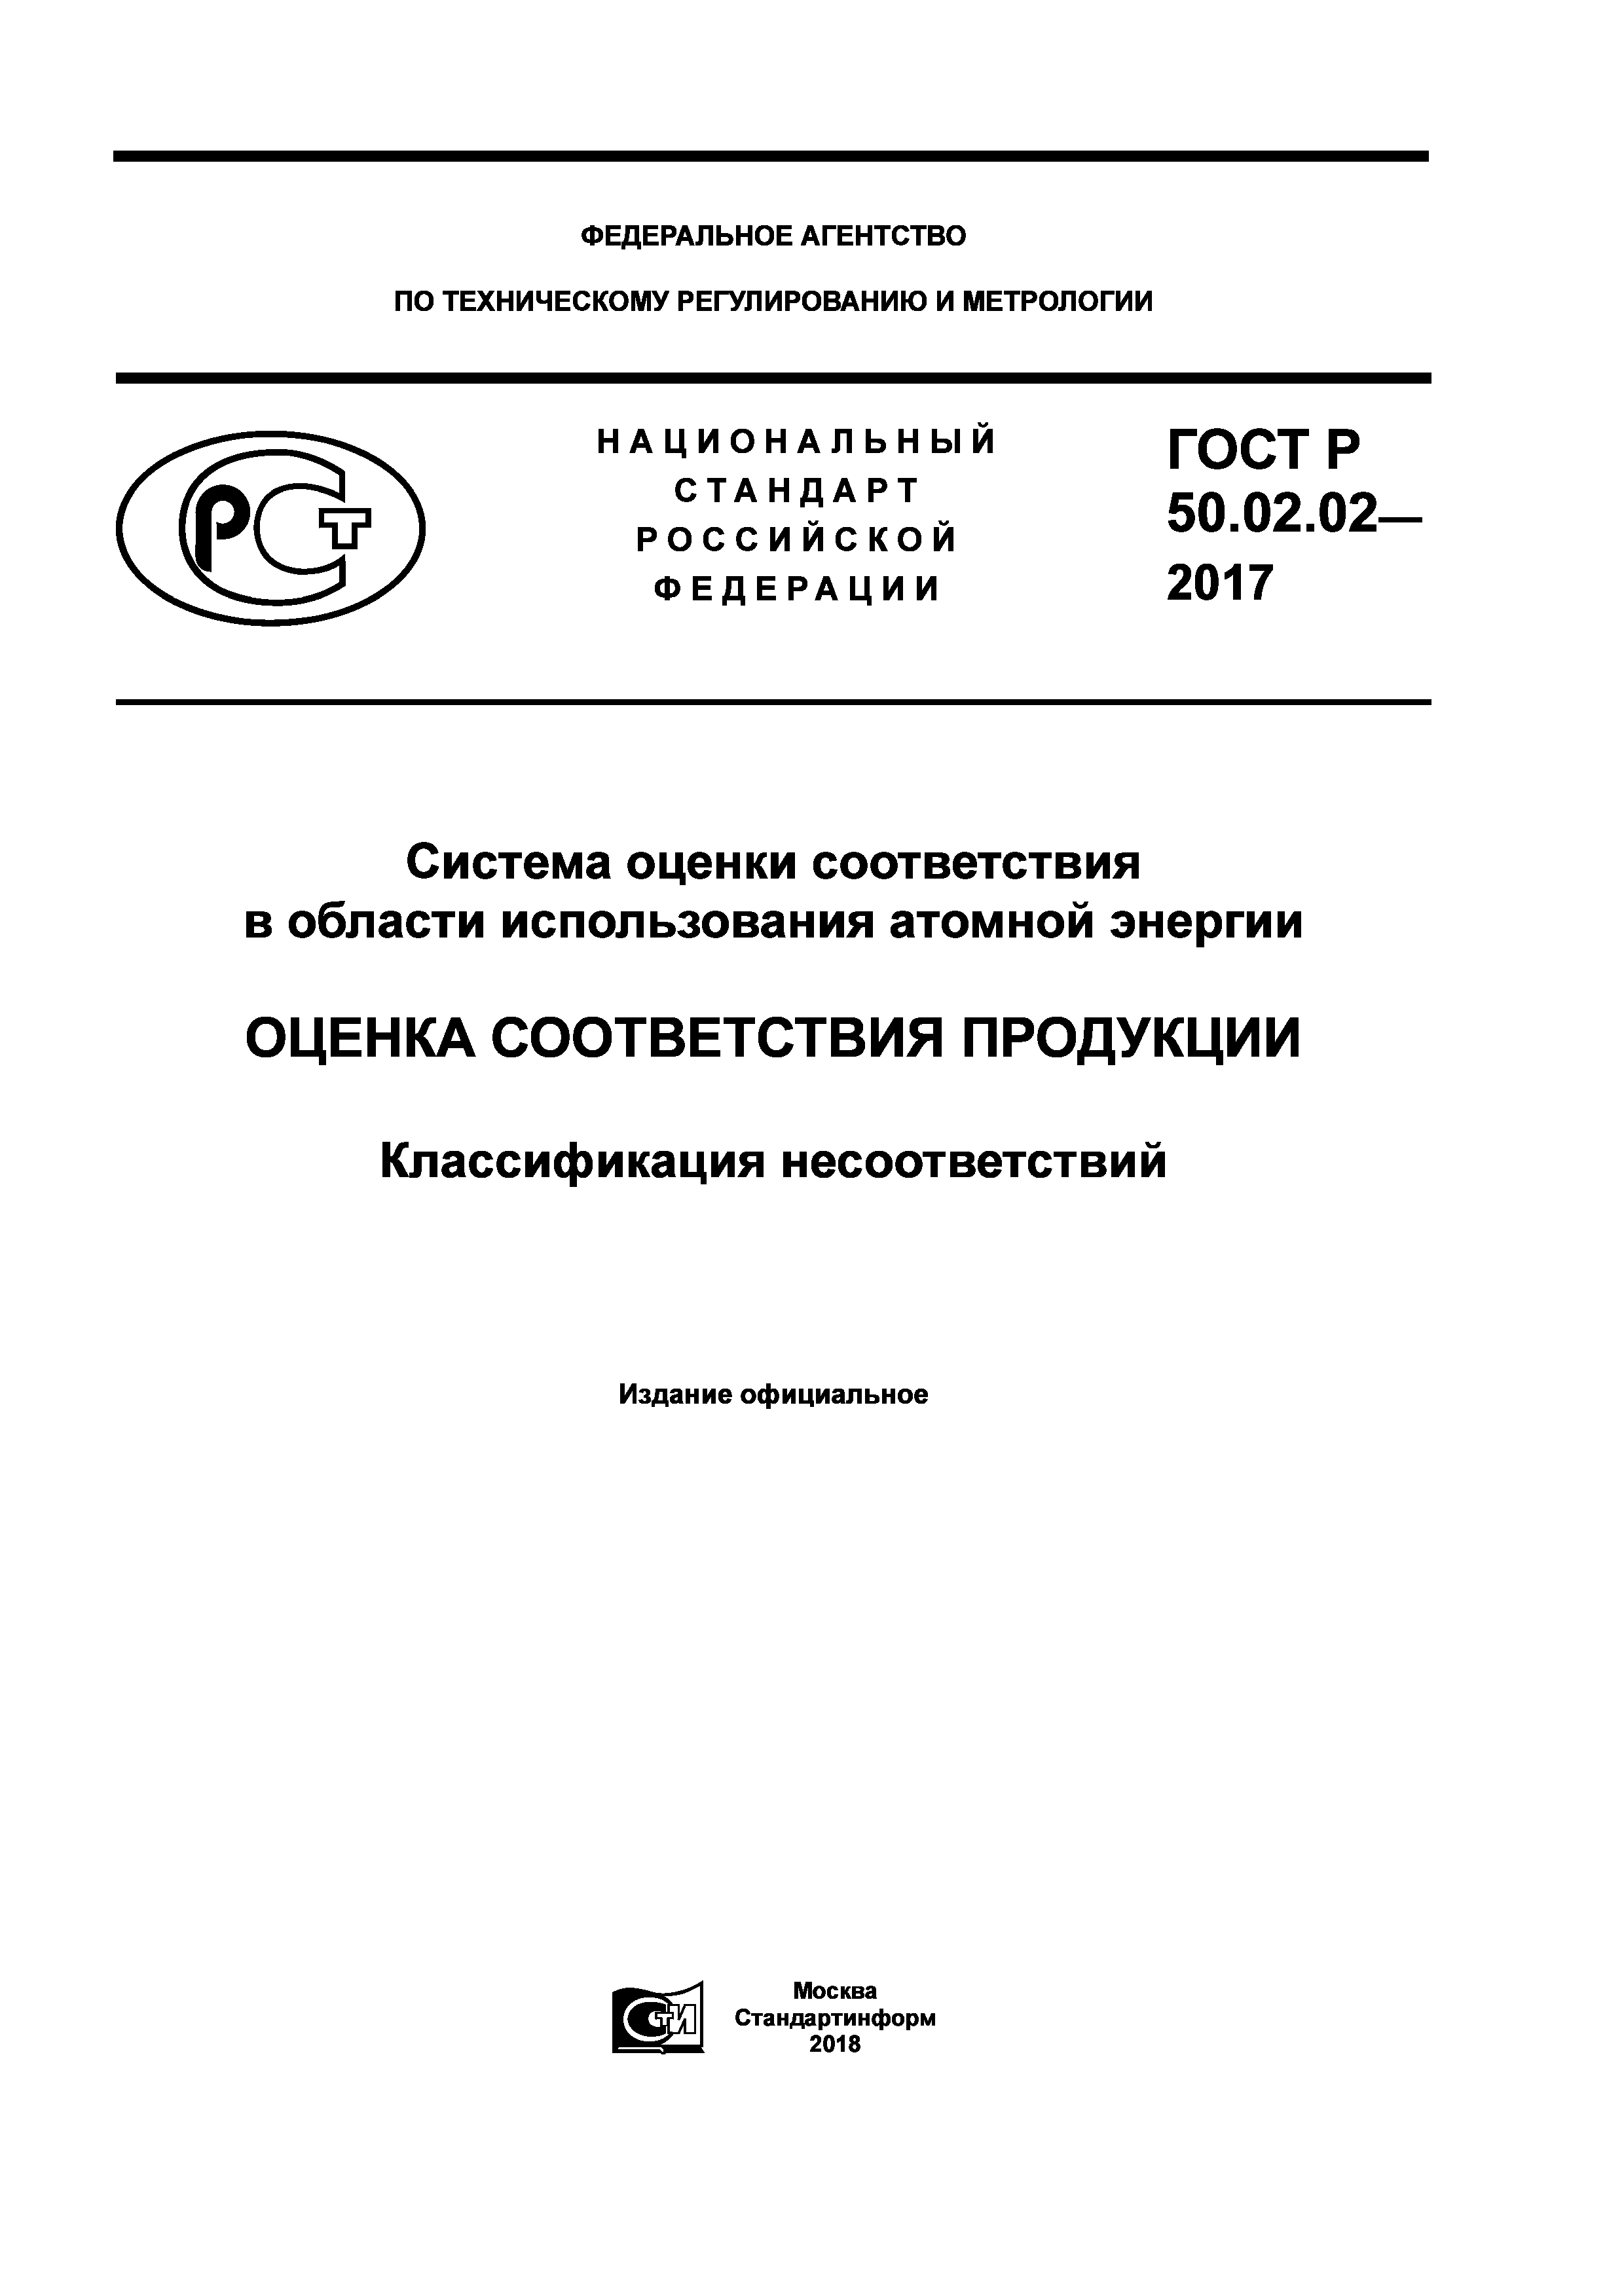 ГОСТ Р 50.02.02-2017